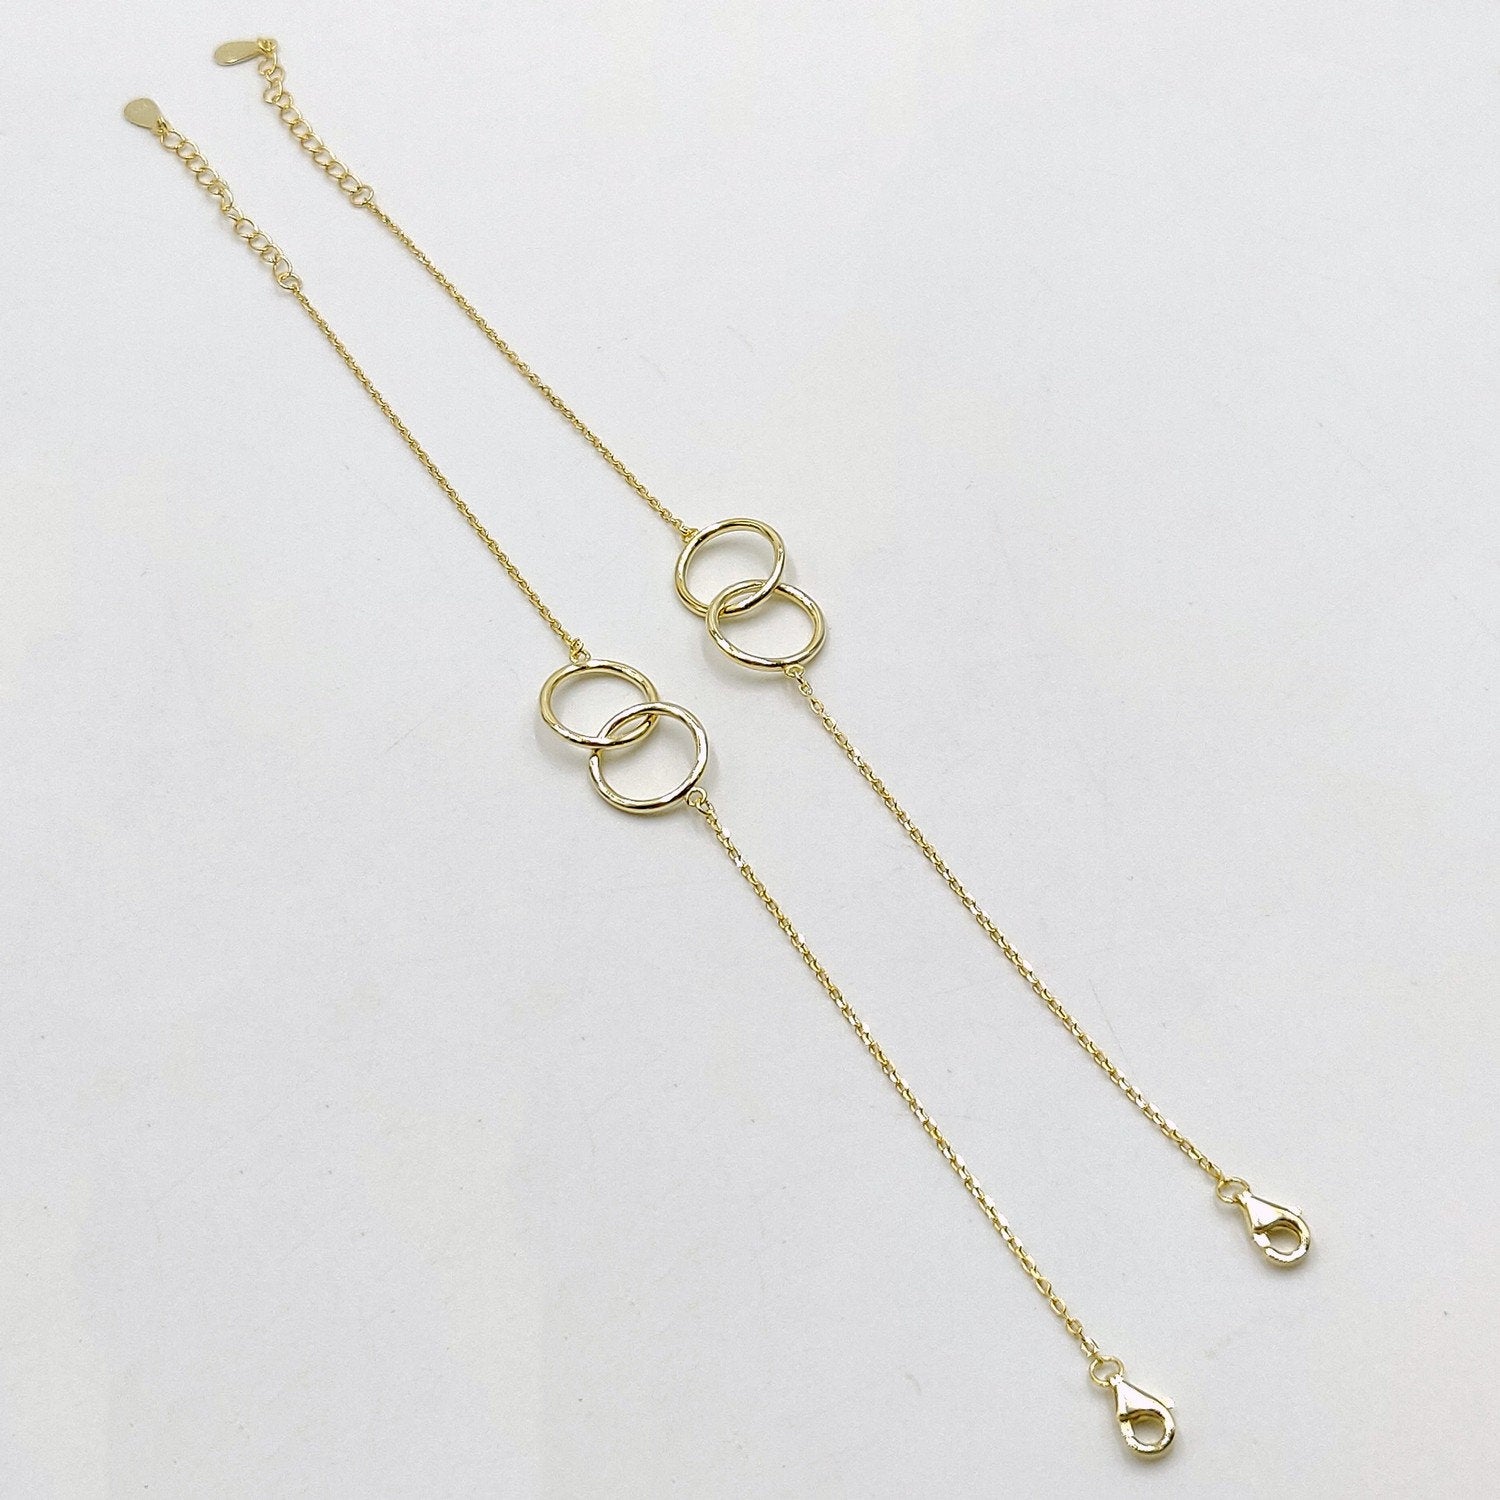 Double Ring Unity Bracelet, 14 K Gold Interlocking Ring Dainty Bracelet, Adjustable chain Friendship - A Girls Gems